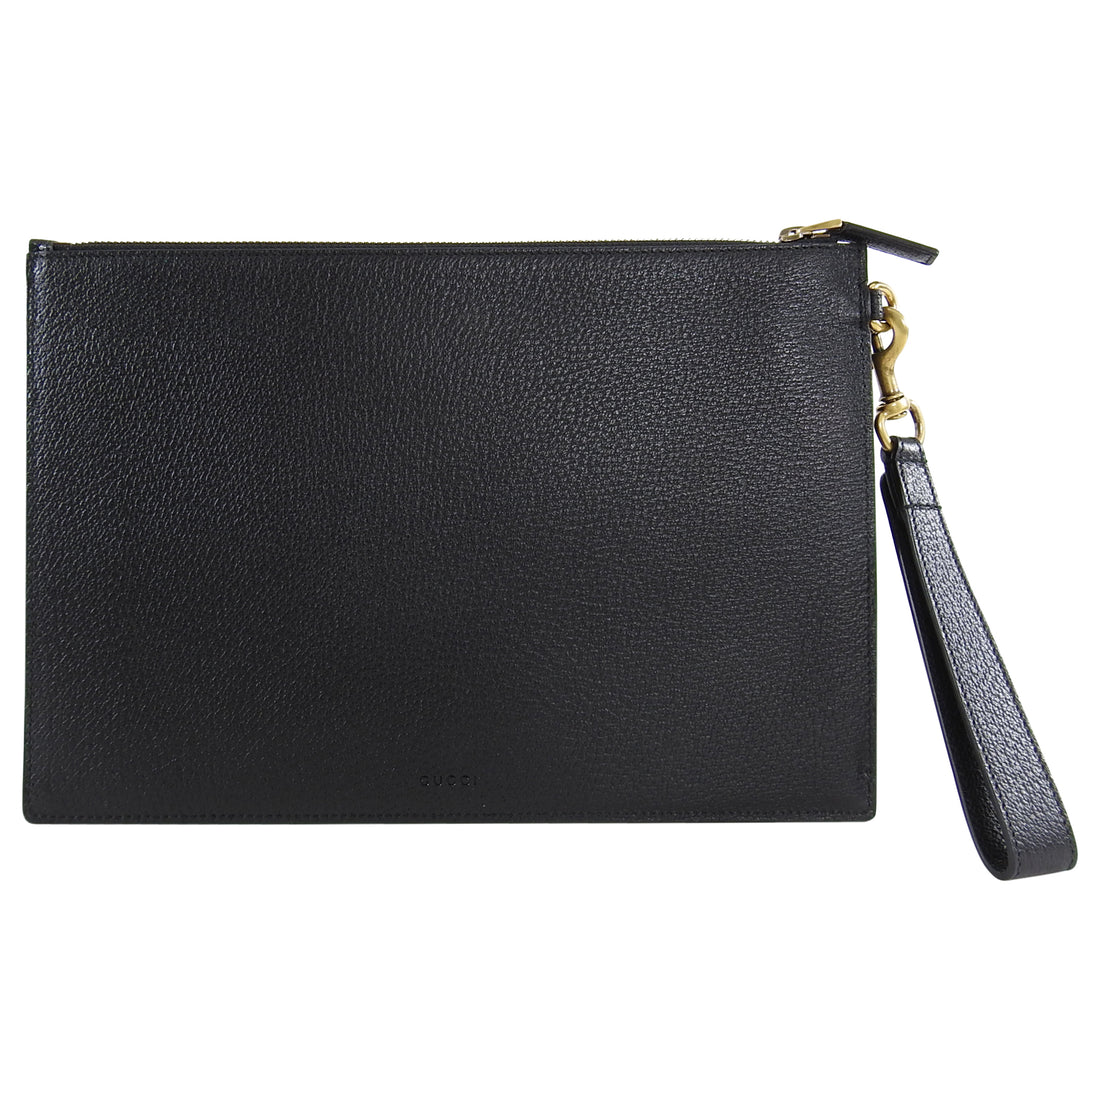 Gucci 2019 Marmont Black Leather GG Portfolio Clutch Bag 